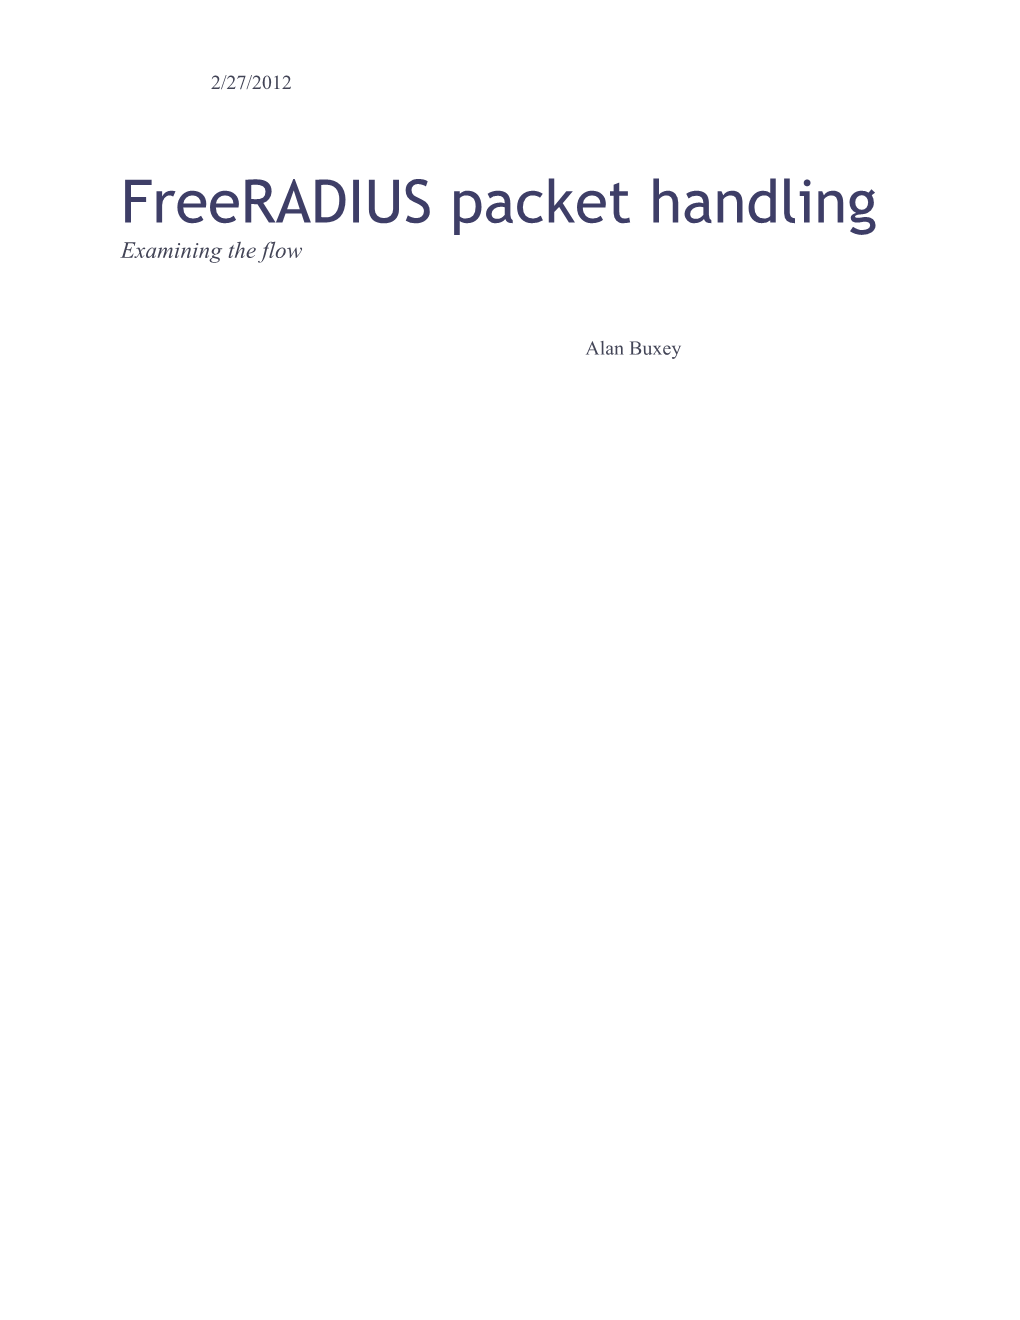 Freeradius Packet Handling